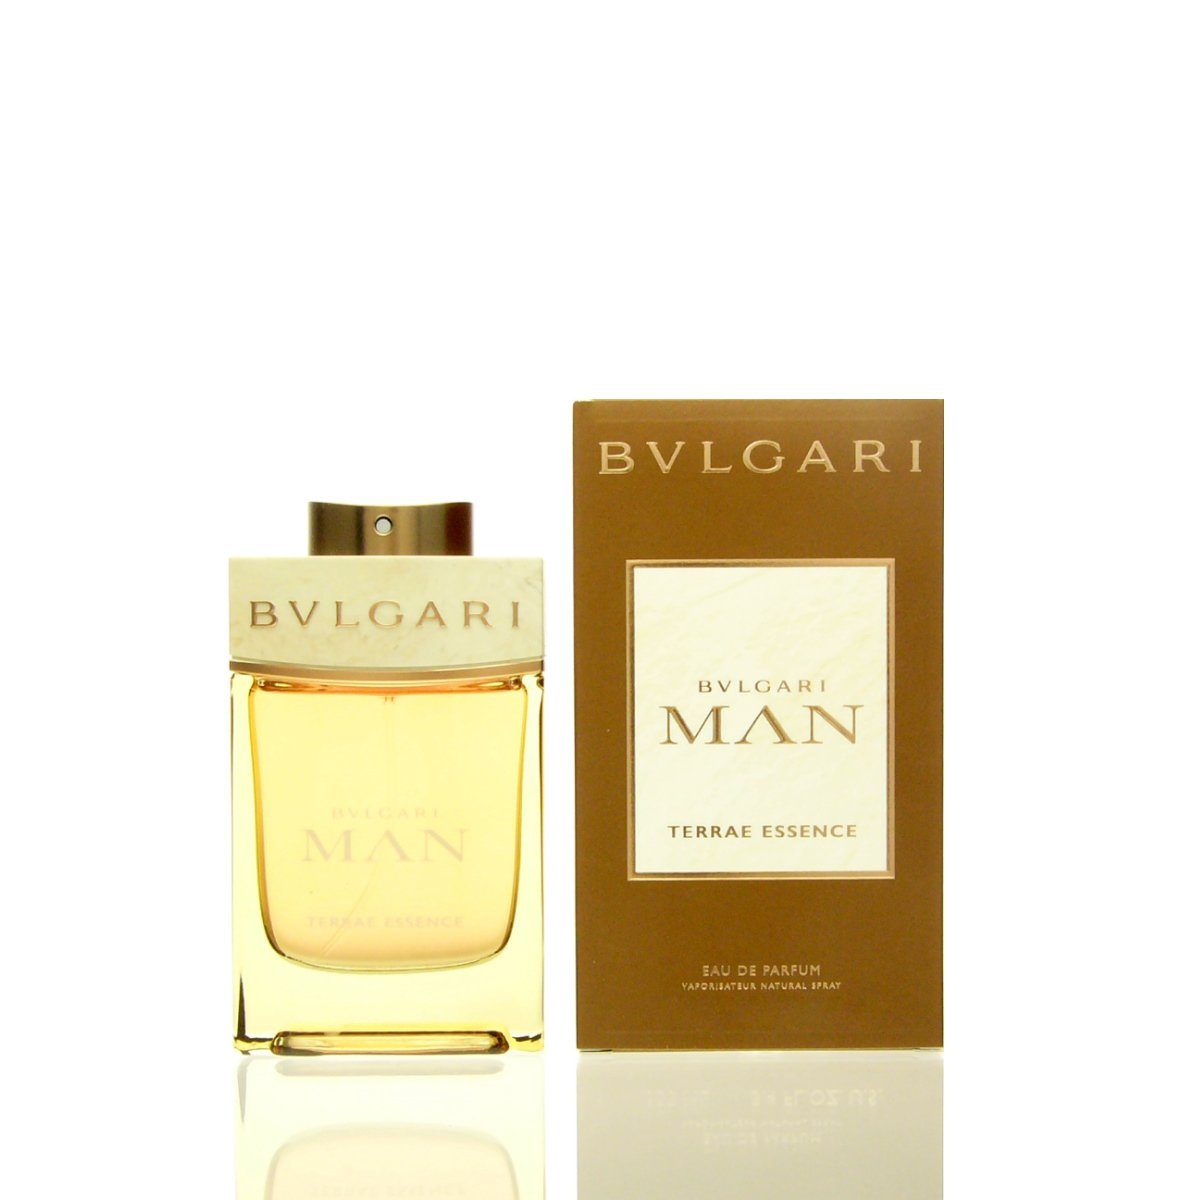 100 Man Eau Parfum Parfum Bvlgari Essence ml de BVLGARI Terrae de Eau